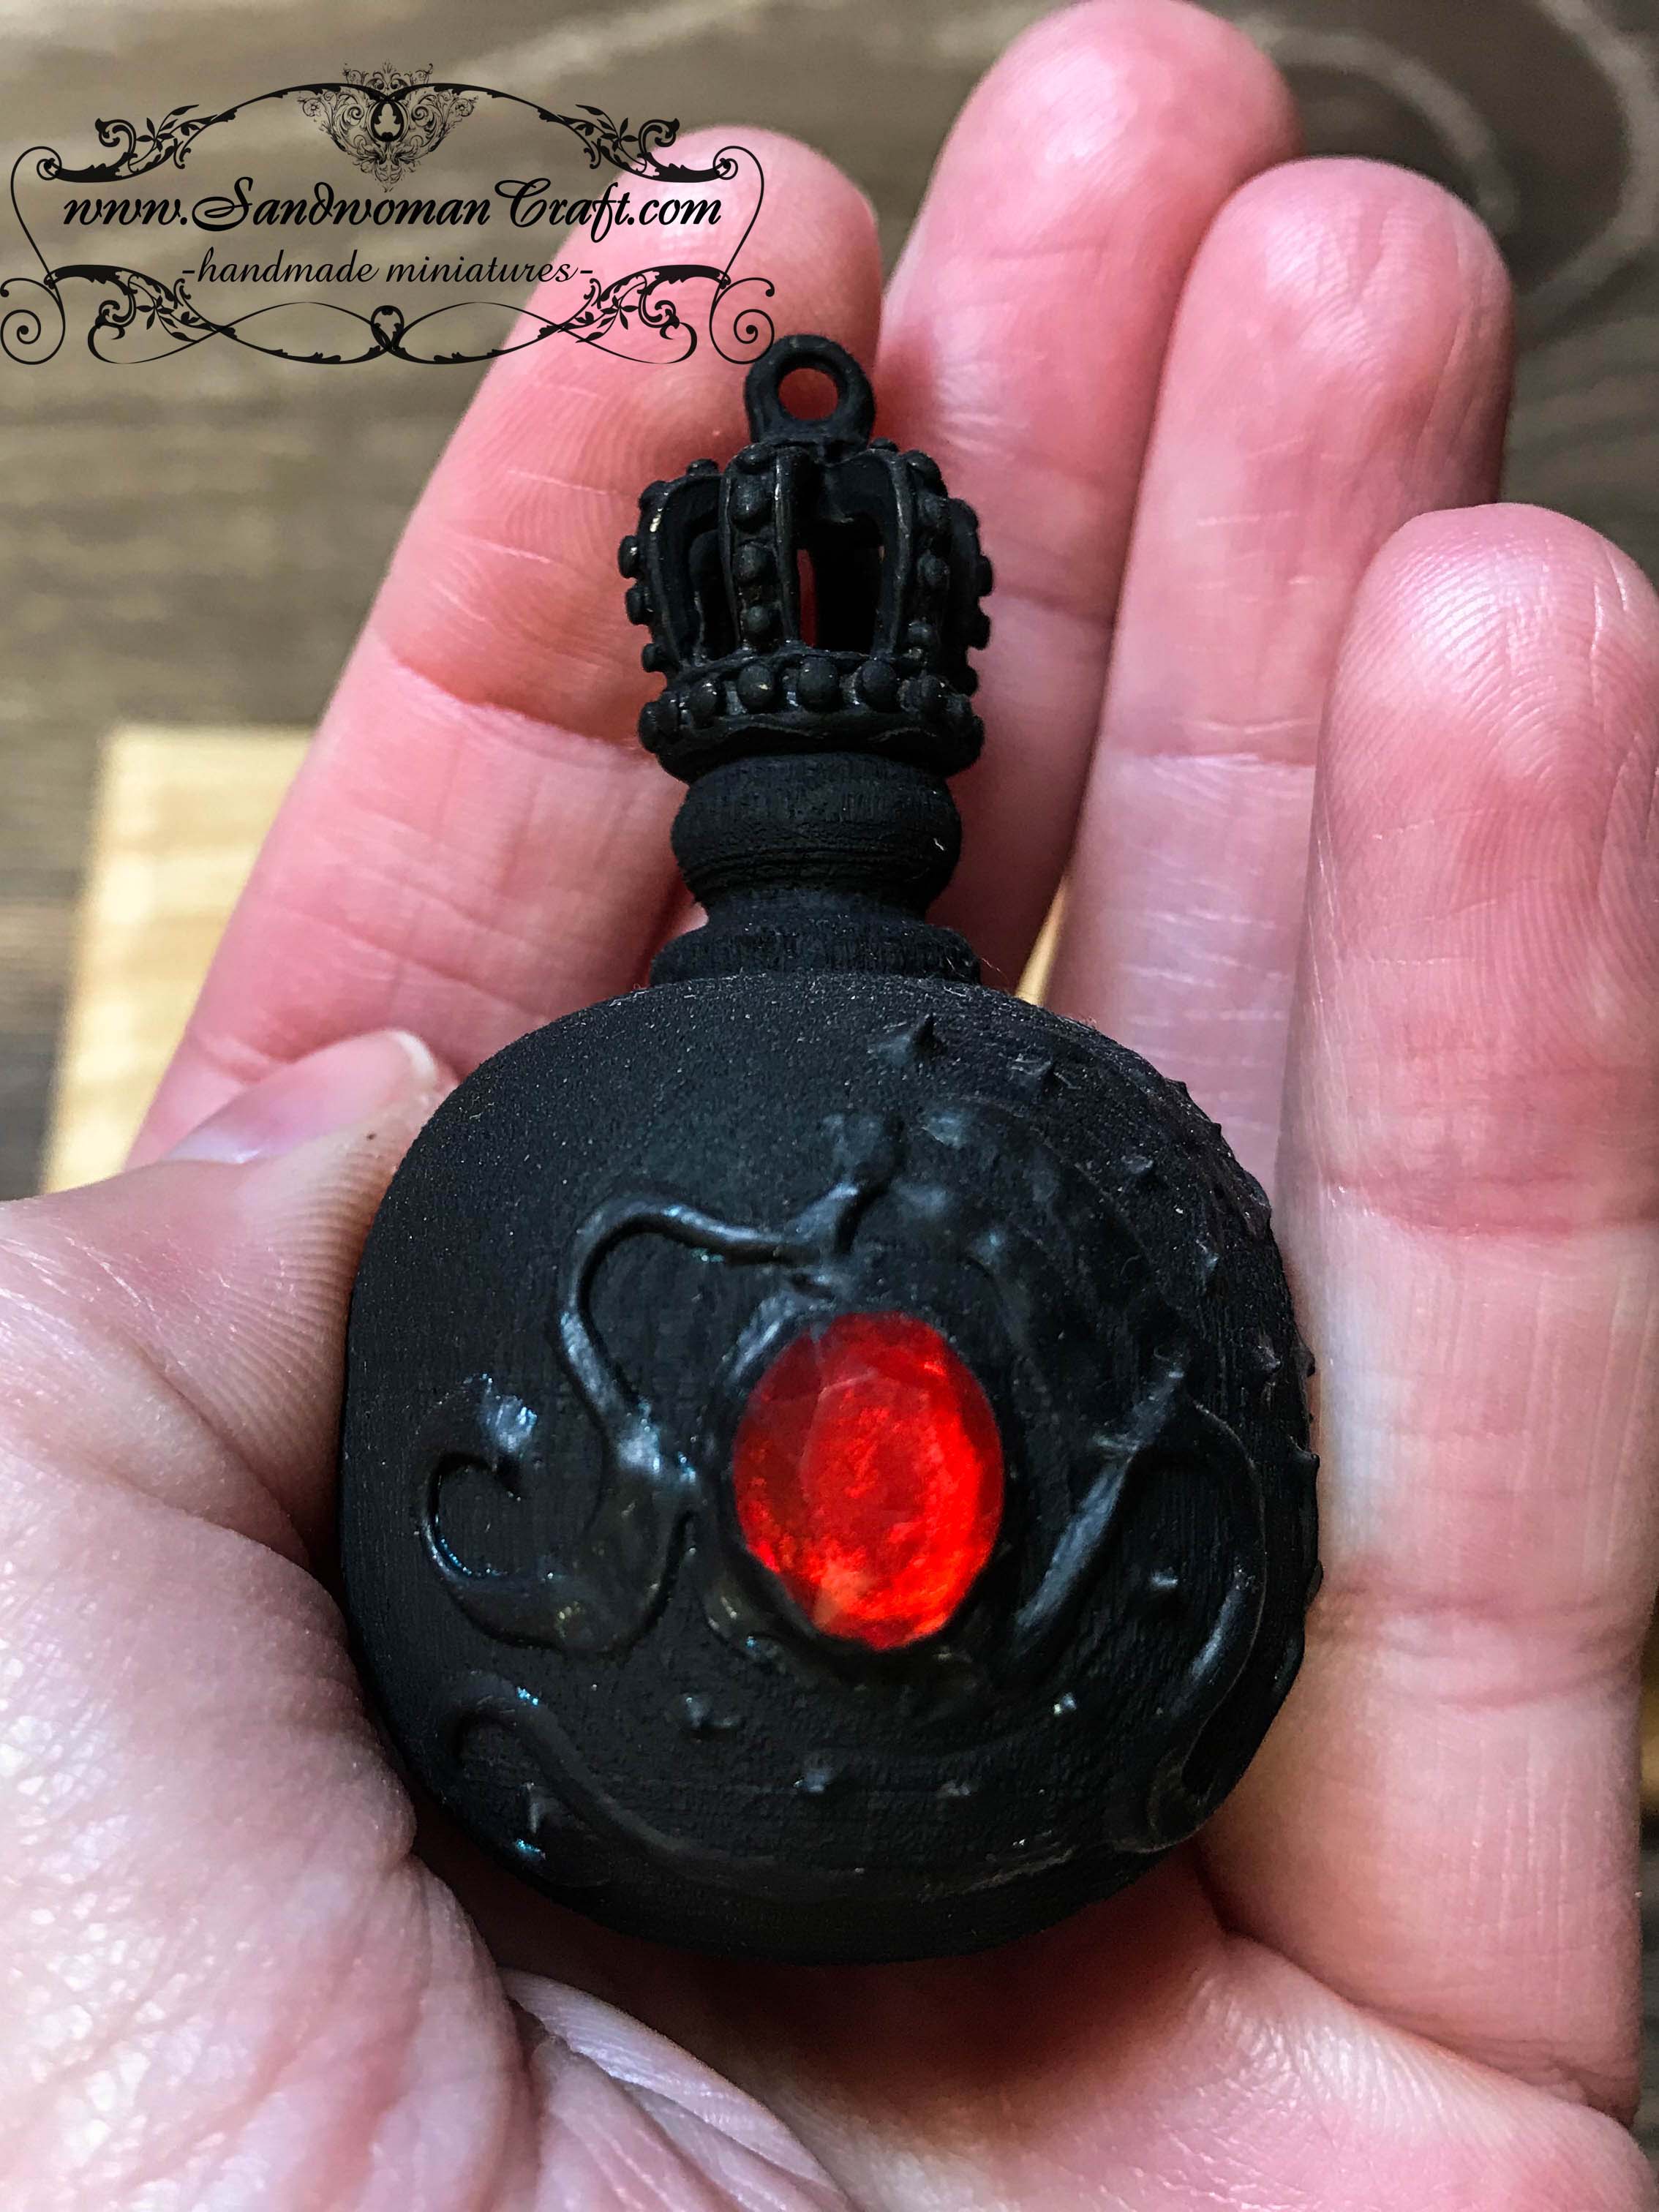 Miniature potion bottle in 1:6 scale